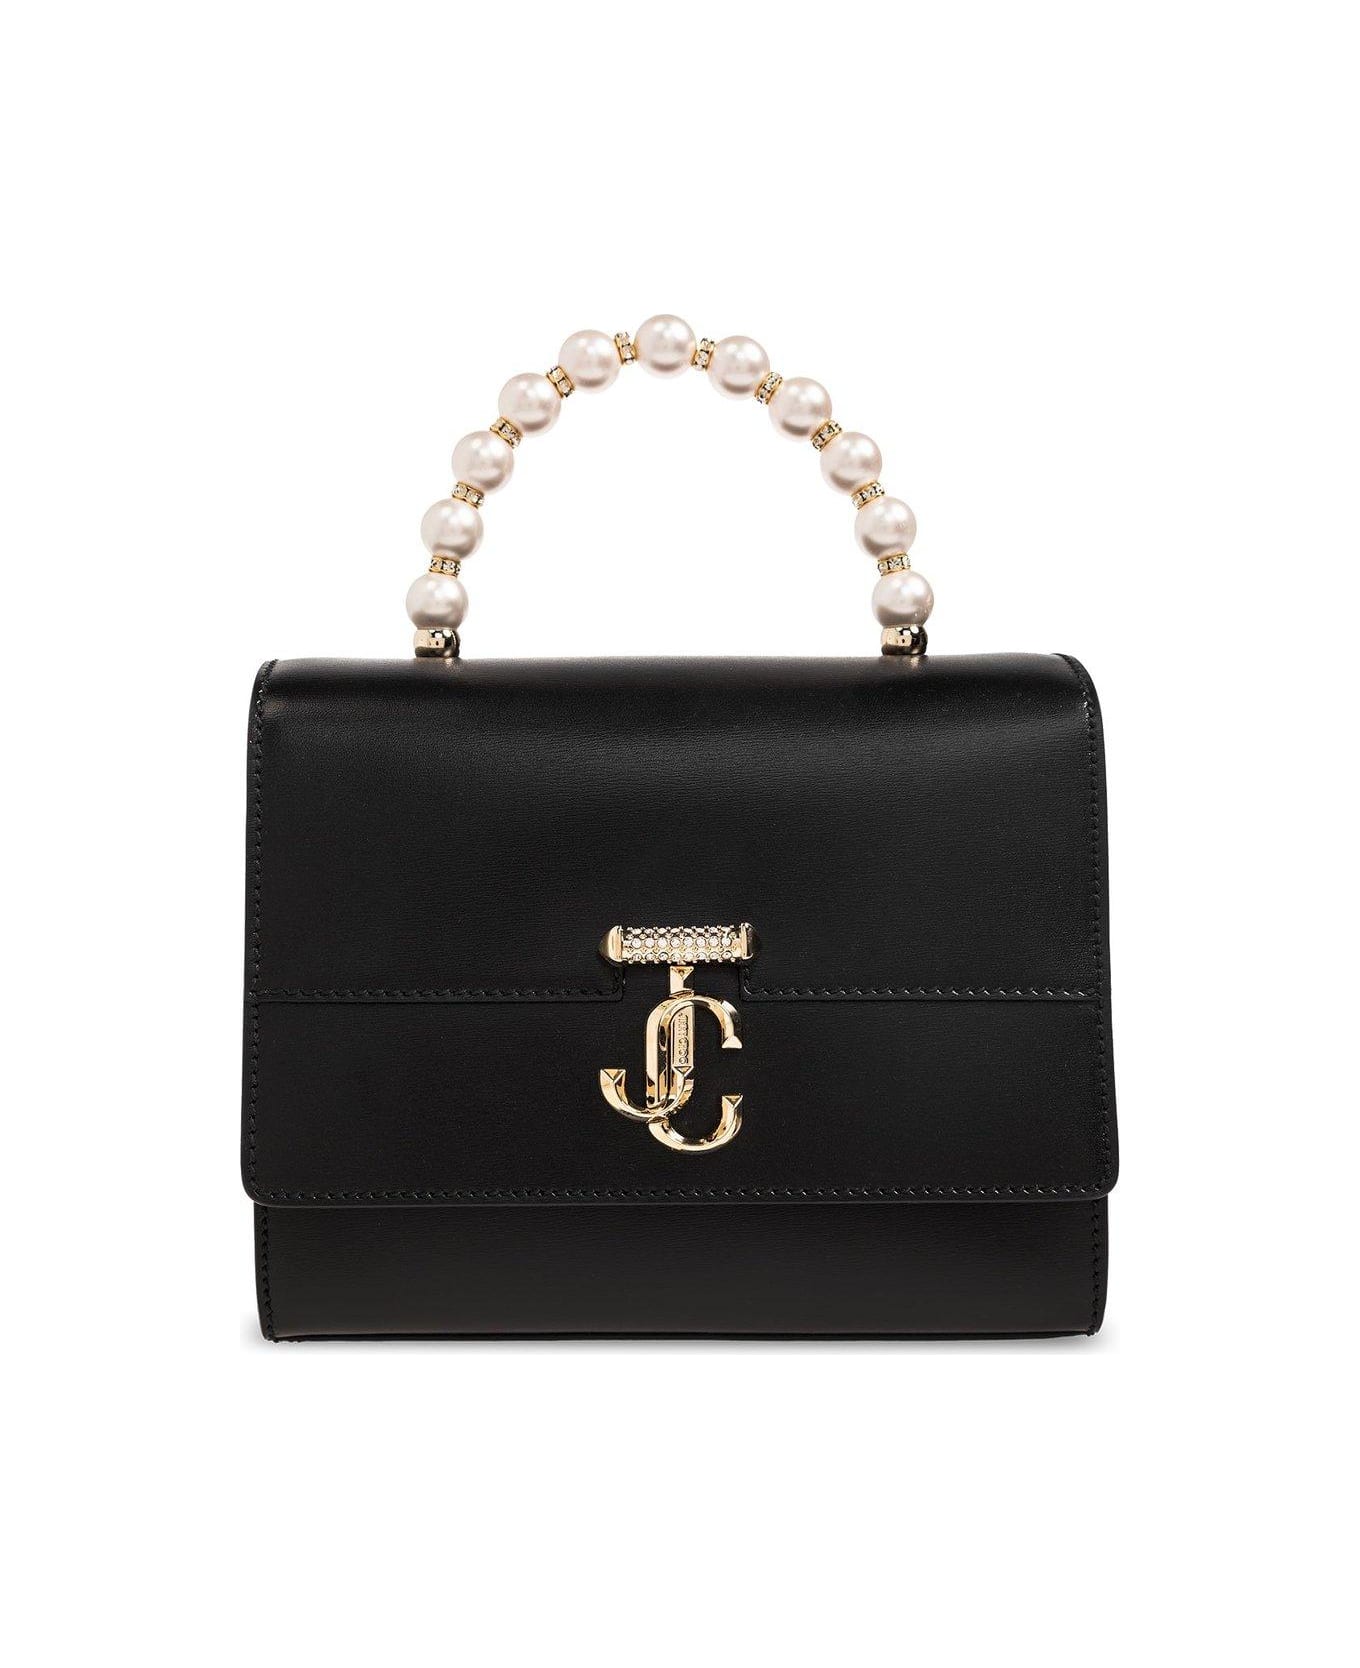 Jimmy Choo Avenue Small Shoulder Bag - Black/light gold